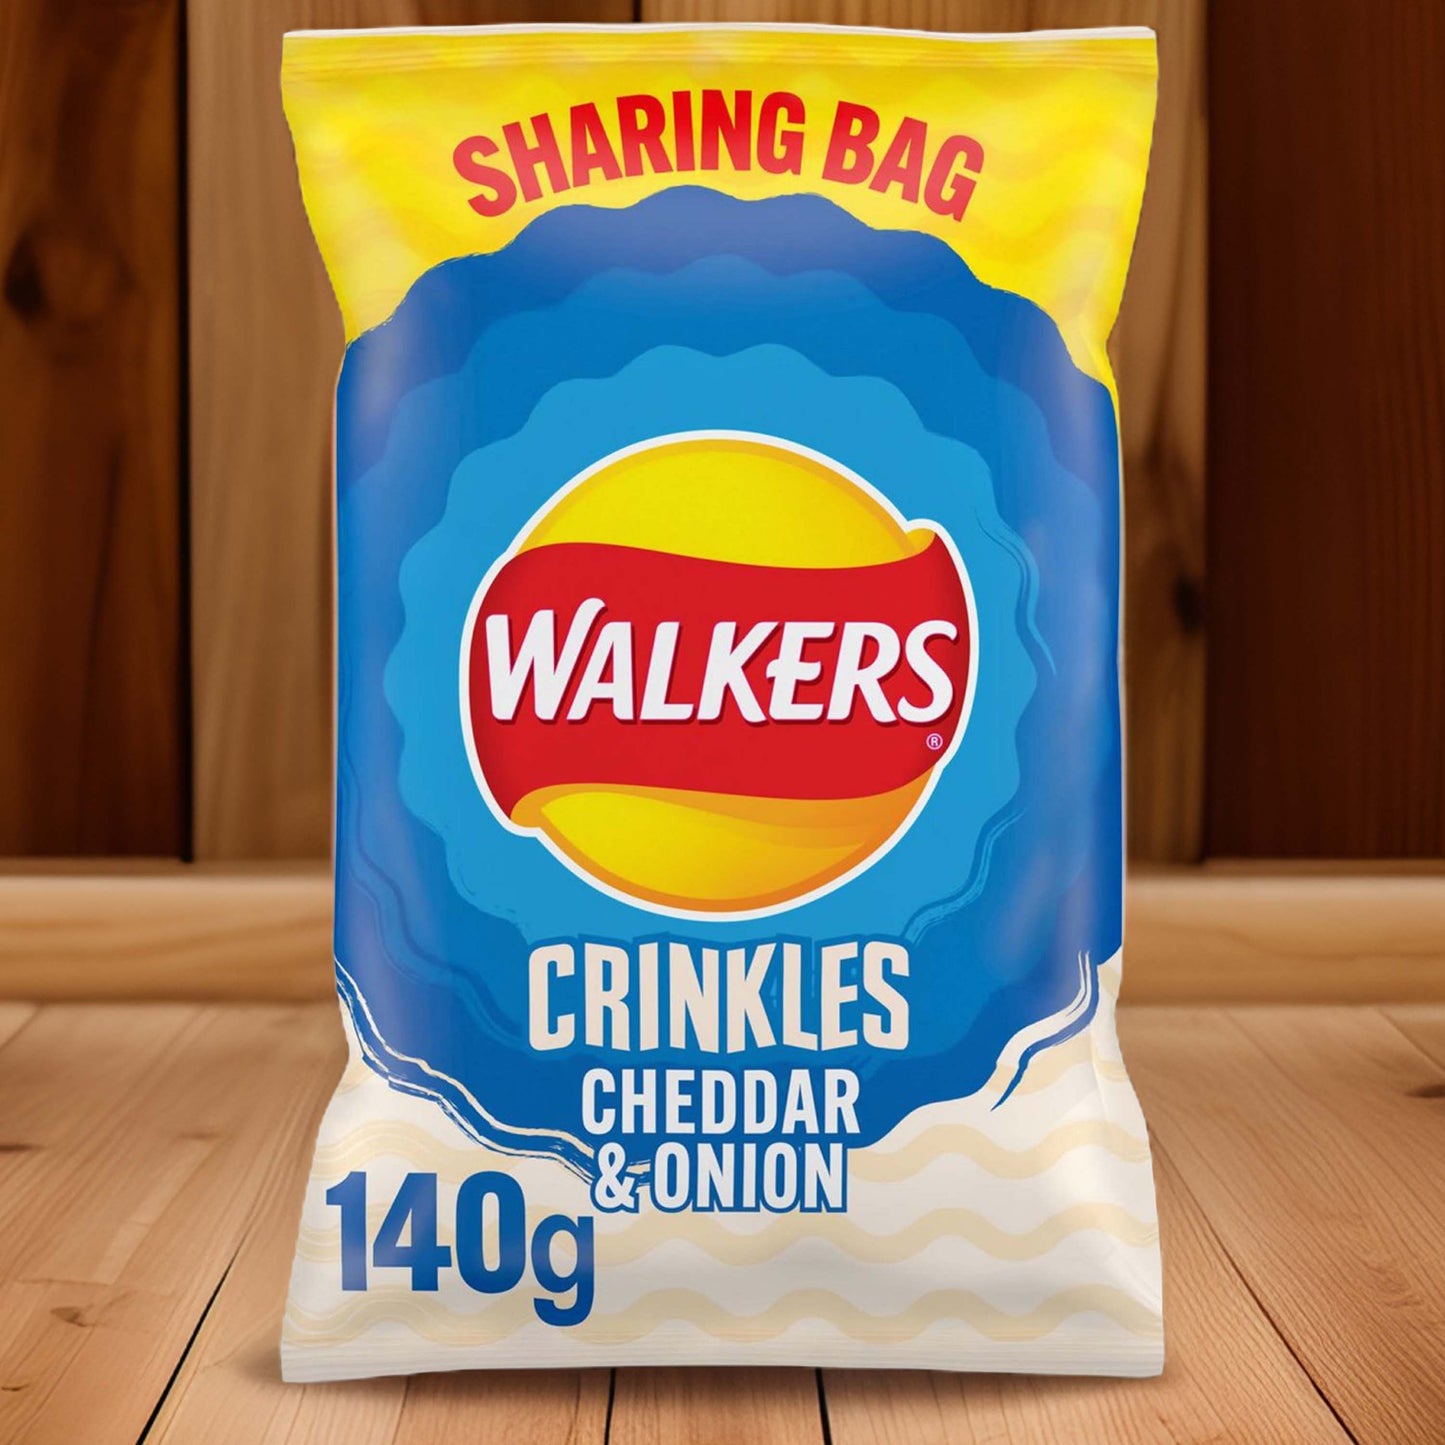 Walkers Crinkles Cheddar Cheese & Onion Sharing Bag Crisps - 140g - Walkers crisps